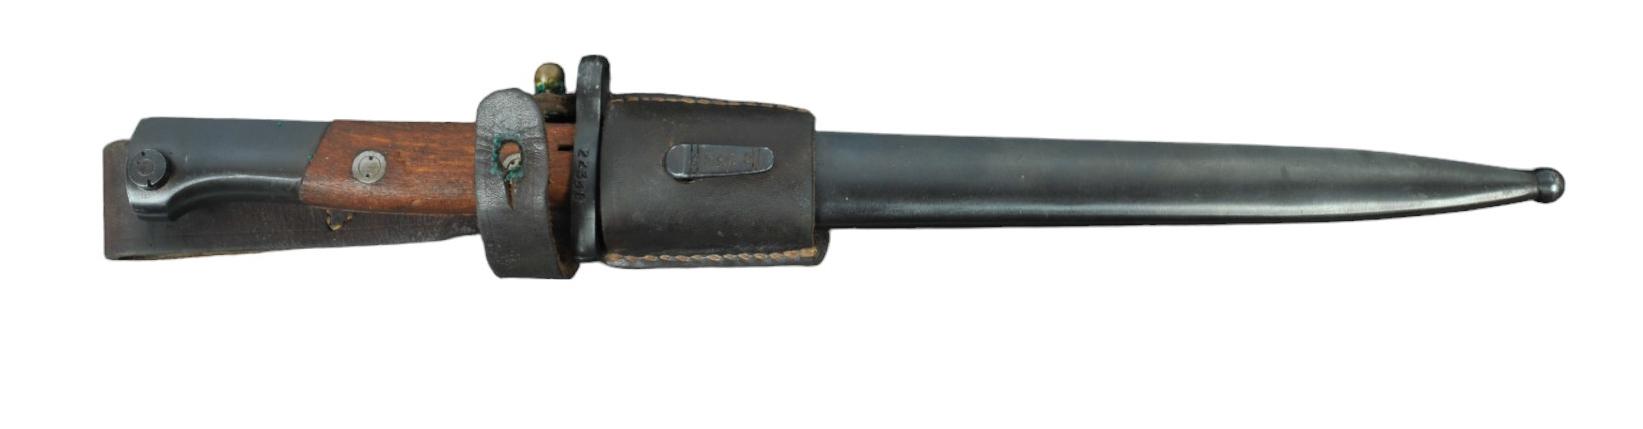 Matching Yugoslavian Military Procedeze 44 Bayonet for the 98k Mauser Rifle (VDM)